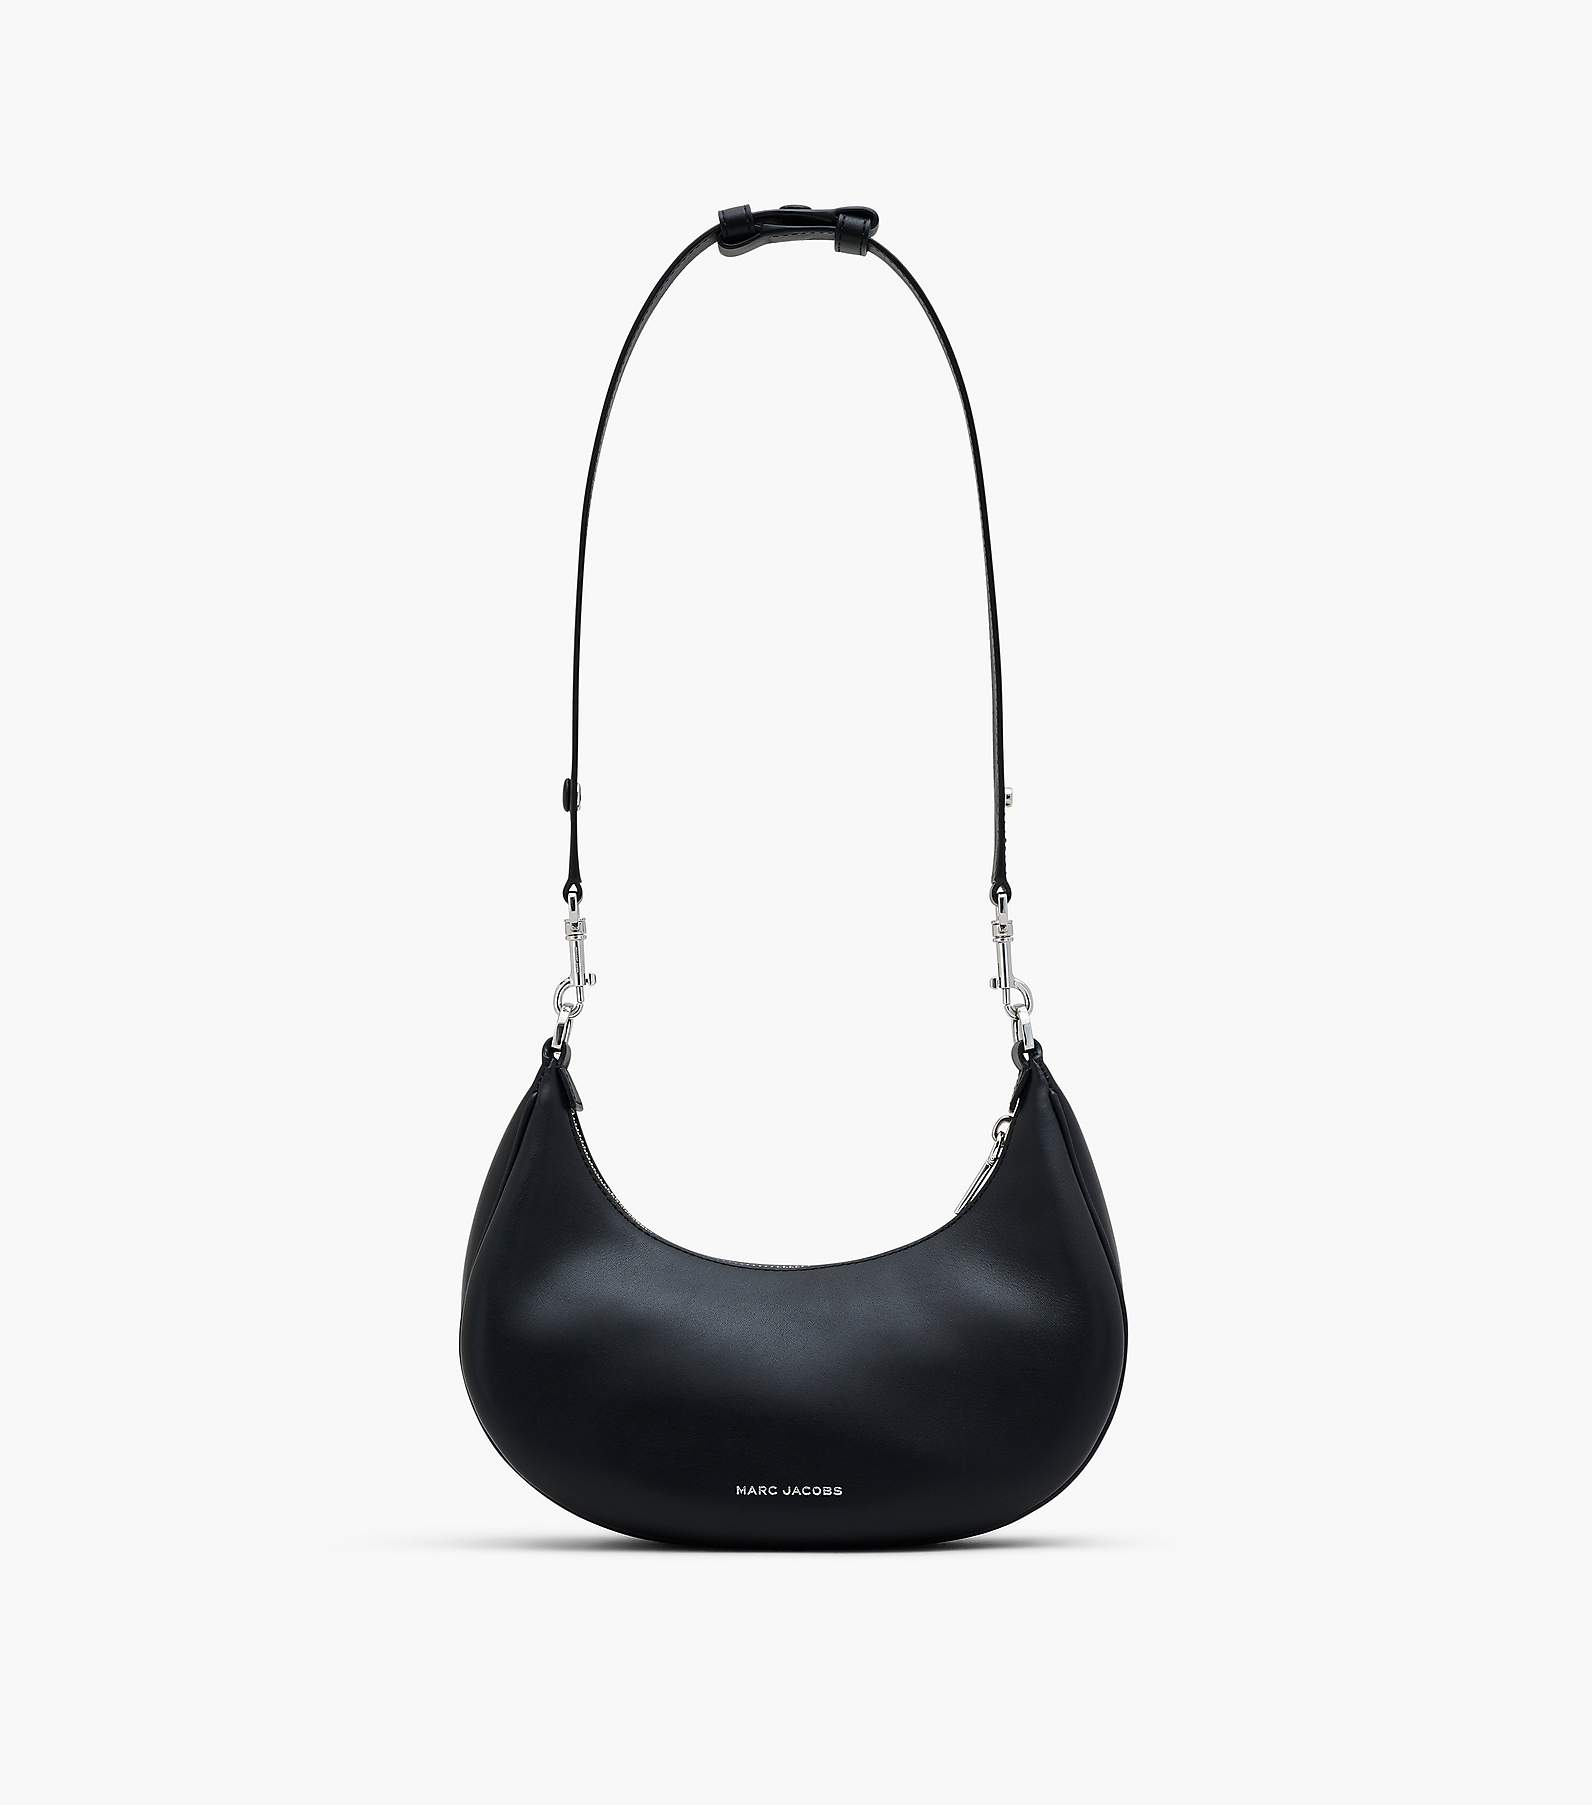 The Curve Bag | Marc Jacobs | Official Site